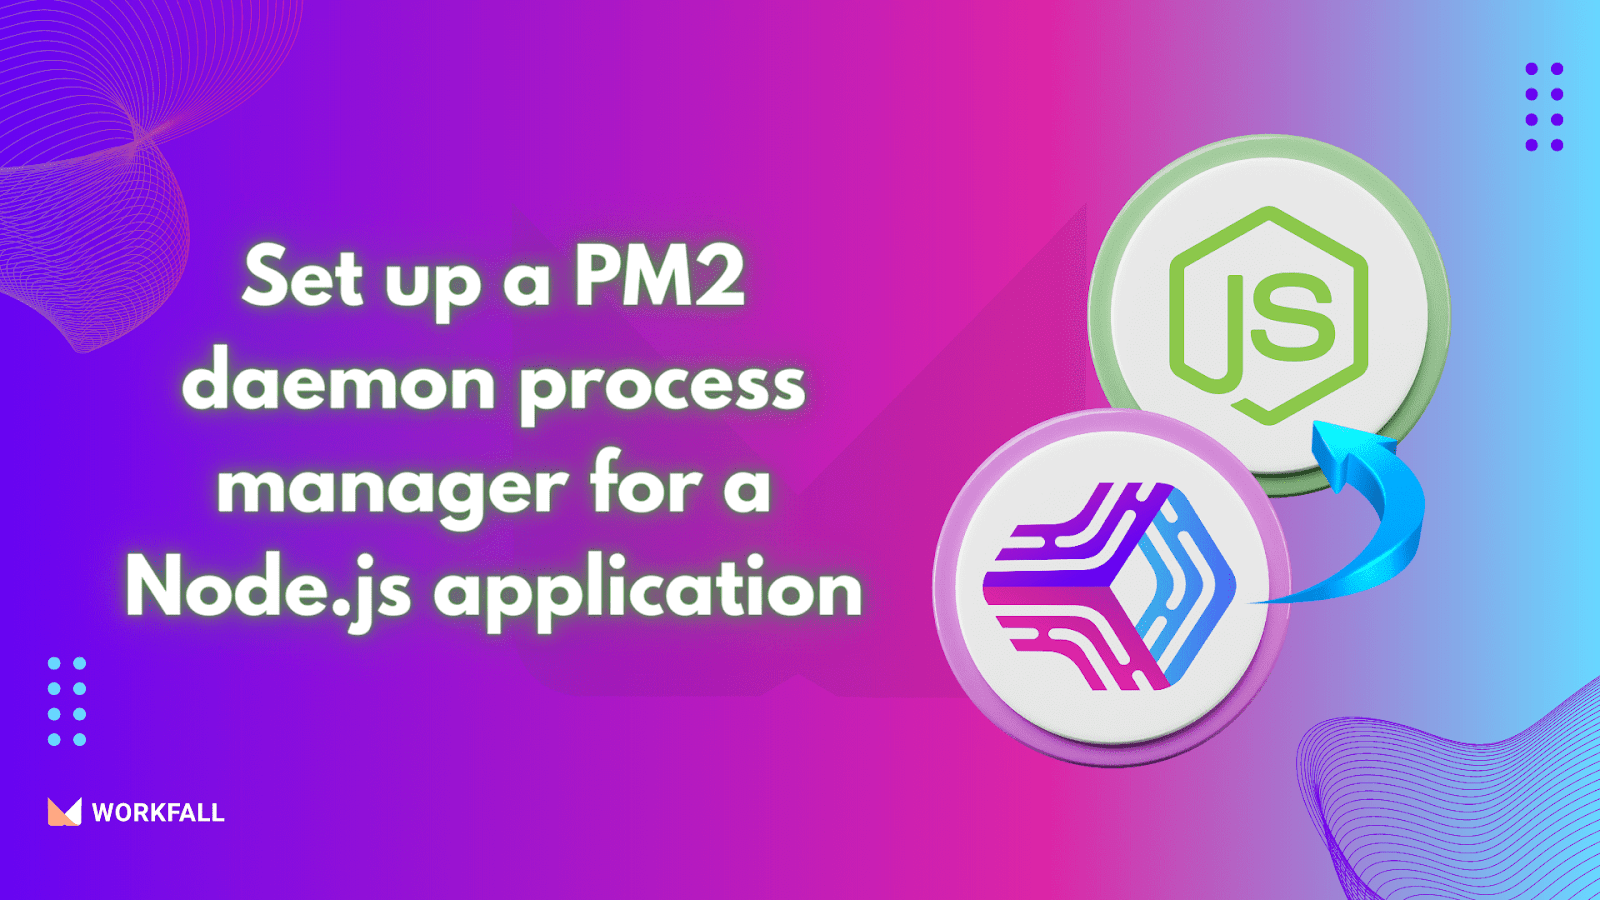 PM2 daemon process manager for a Node.js application